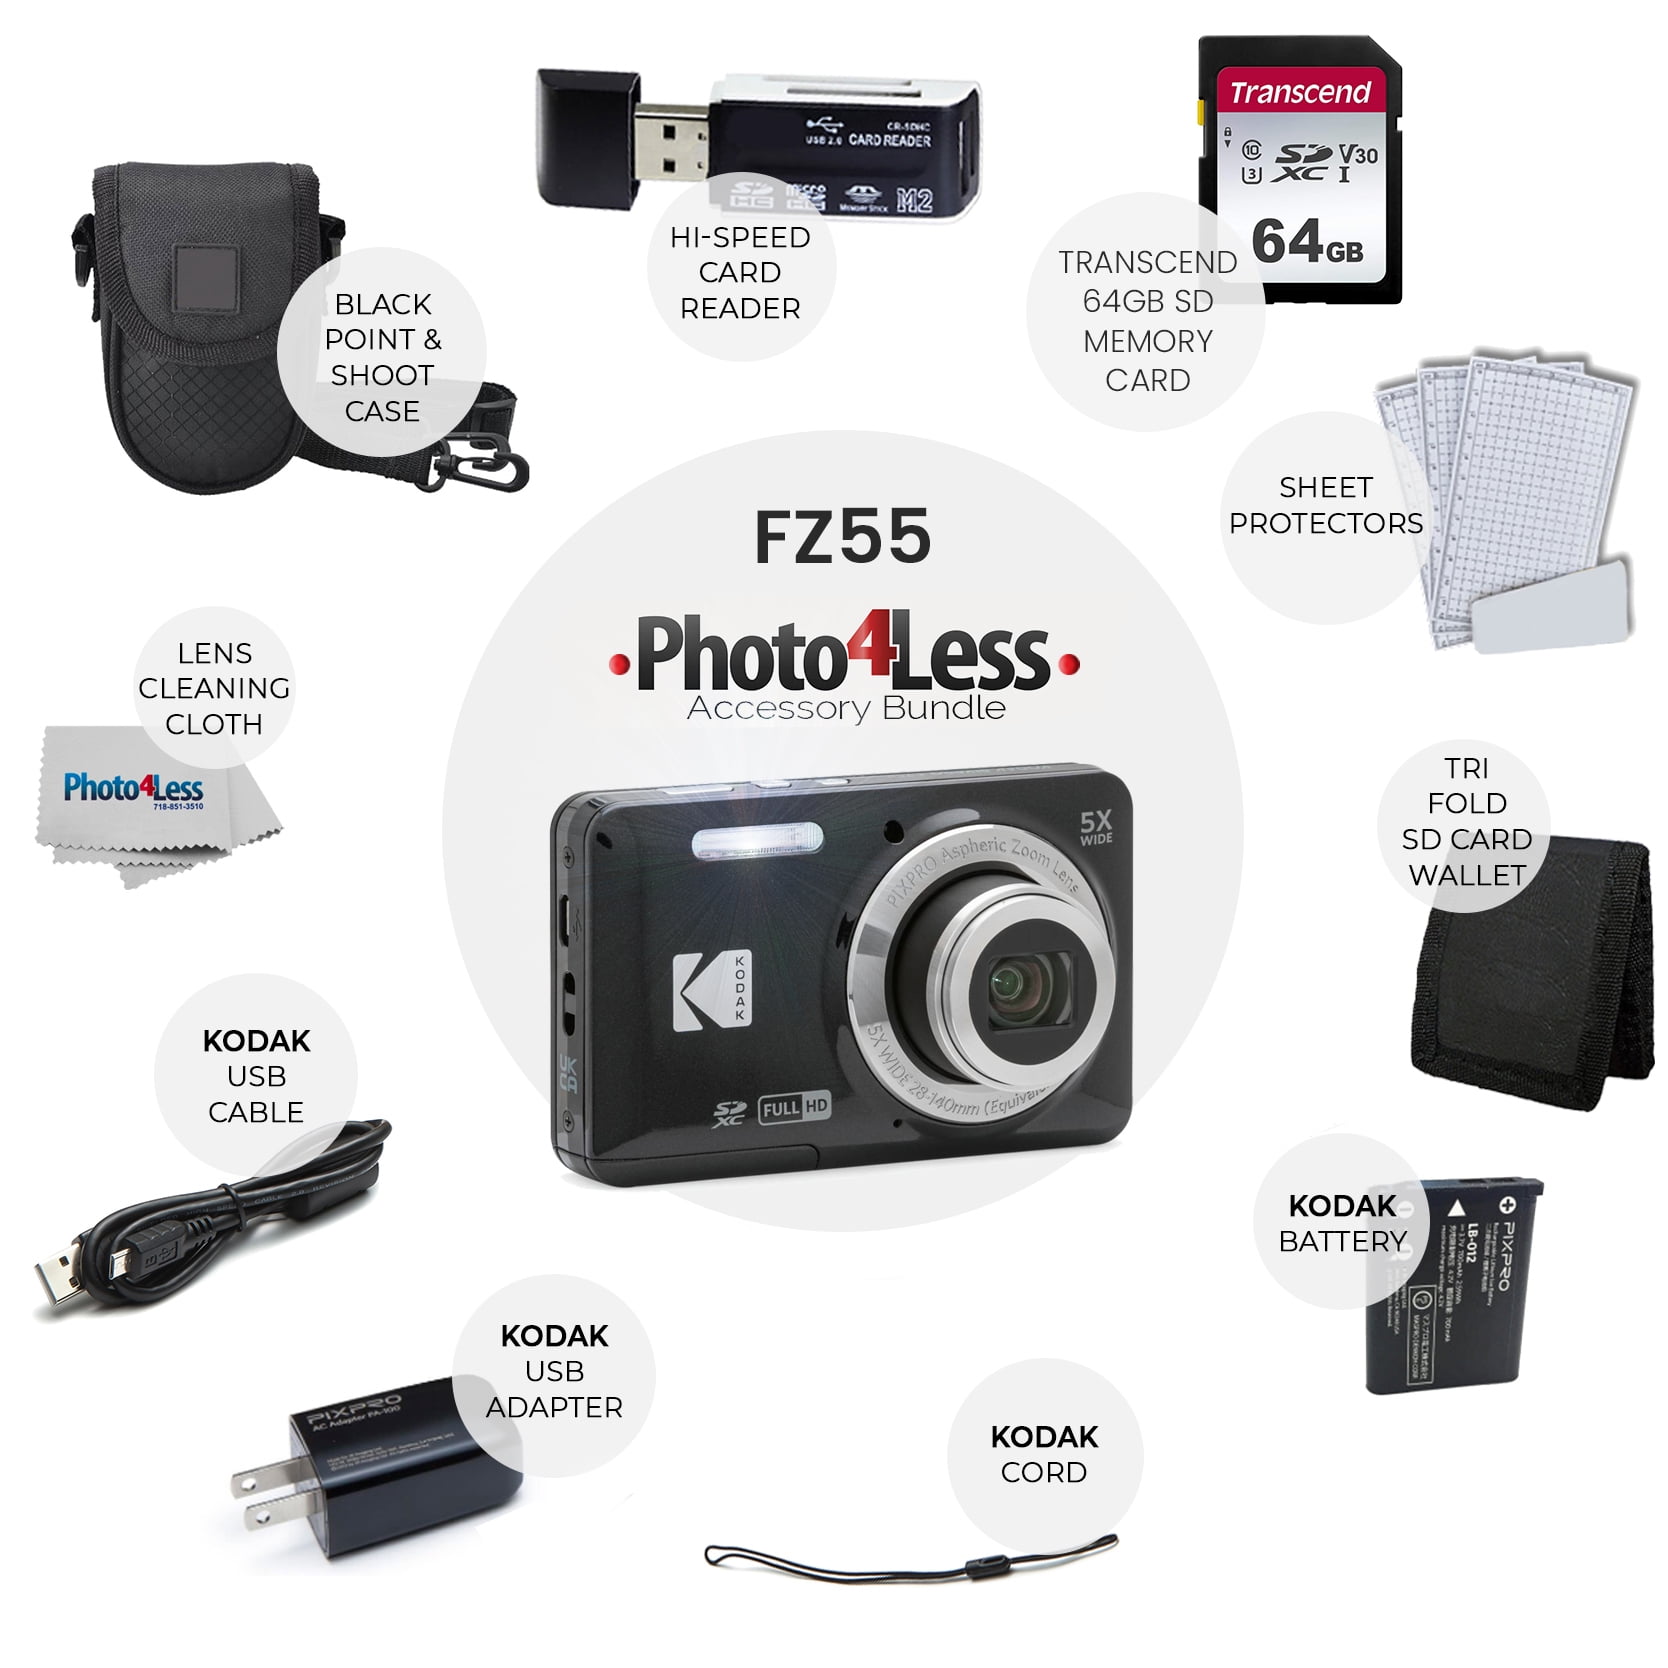 Kodak PIXPRO FZ55 Digital Camera (Black) + Accessories 